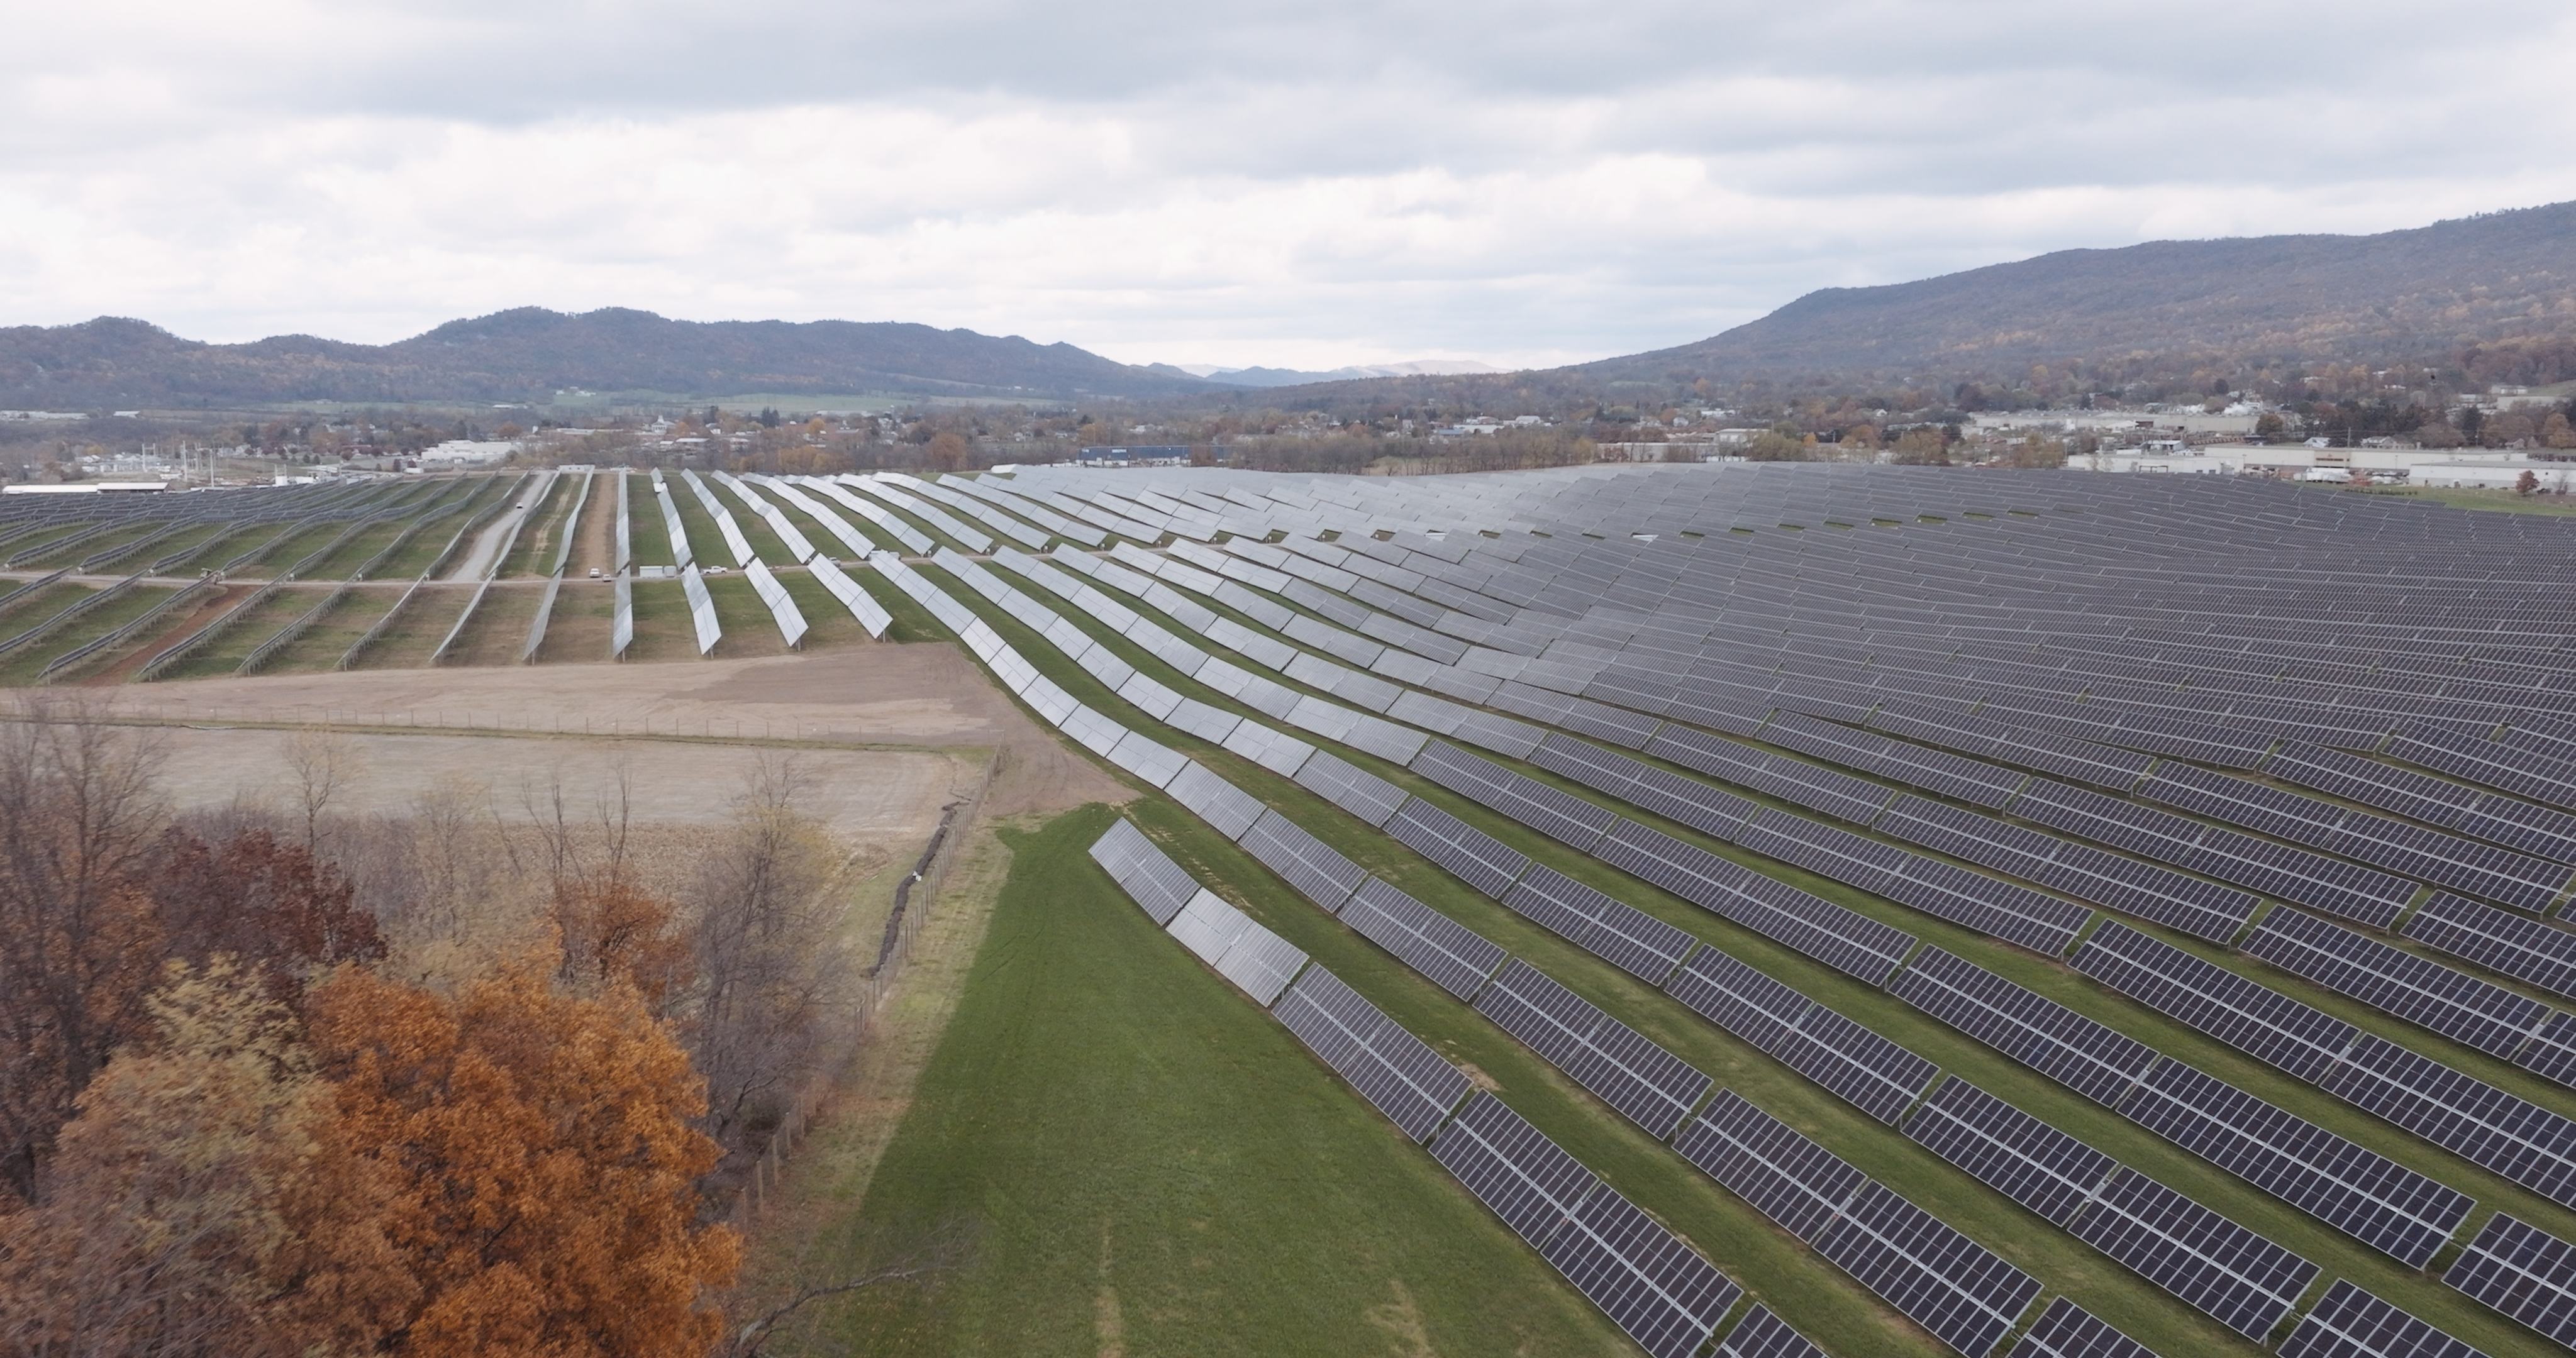 A solar farm stretches into the distance